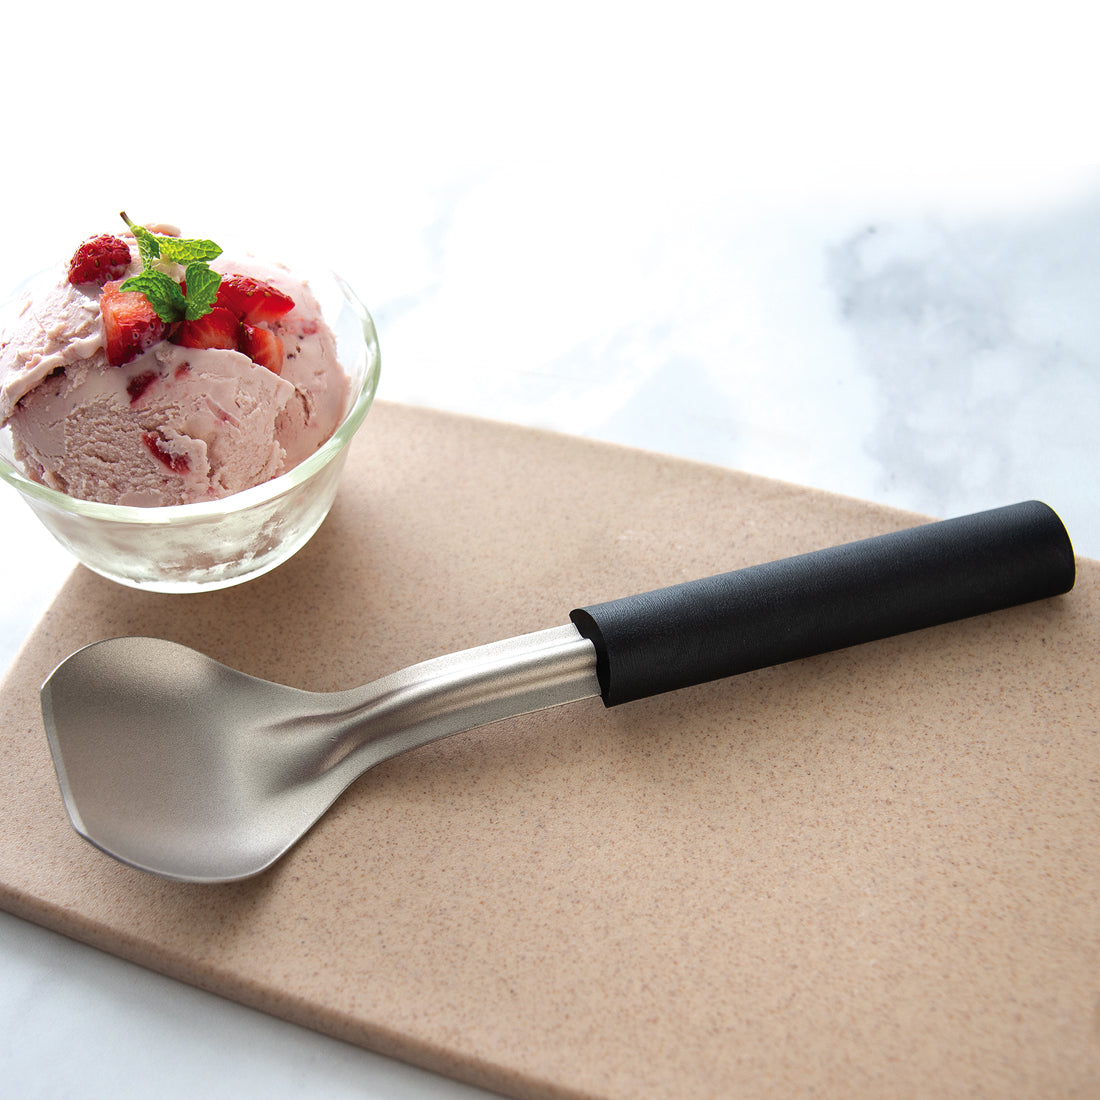  Cutco Cutlery Ice Cream Scoop Like New: Home & Kitchen